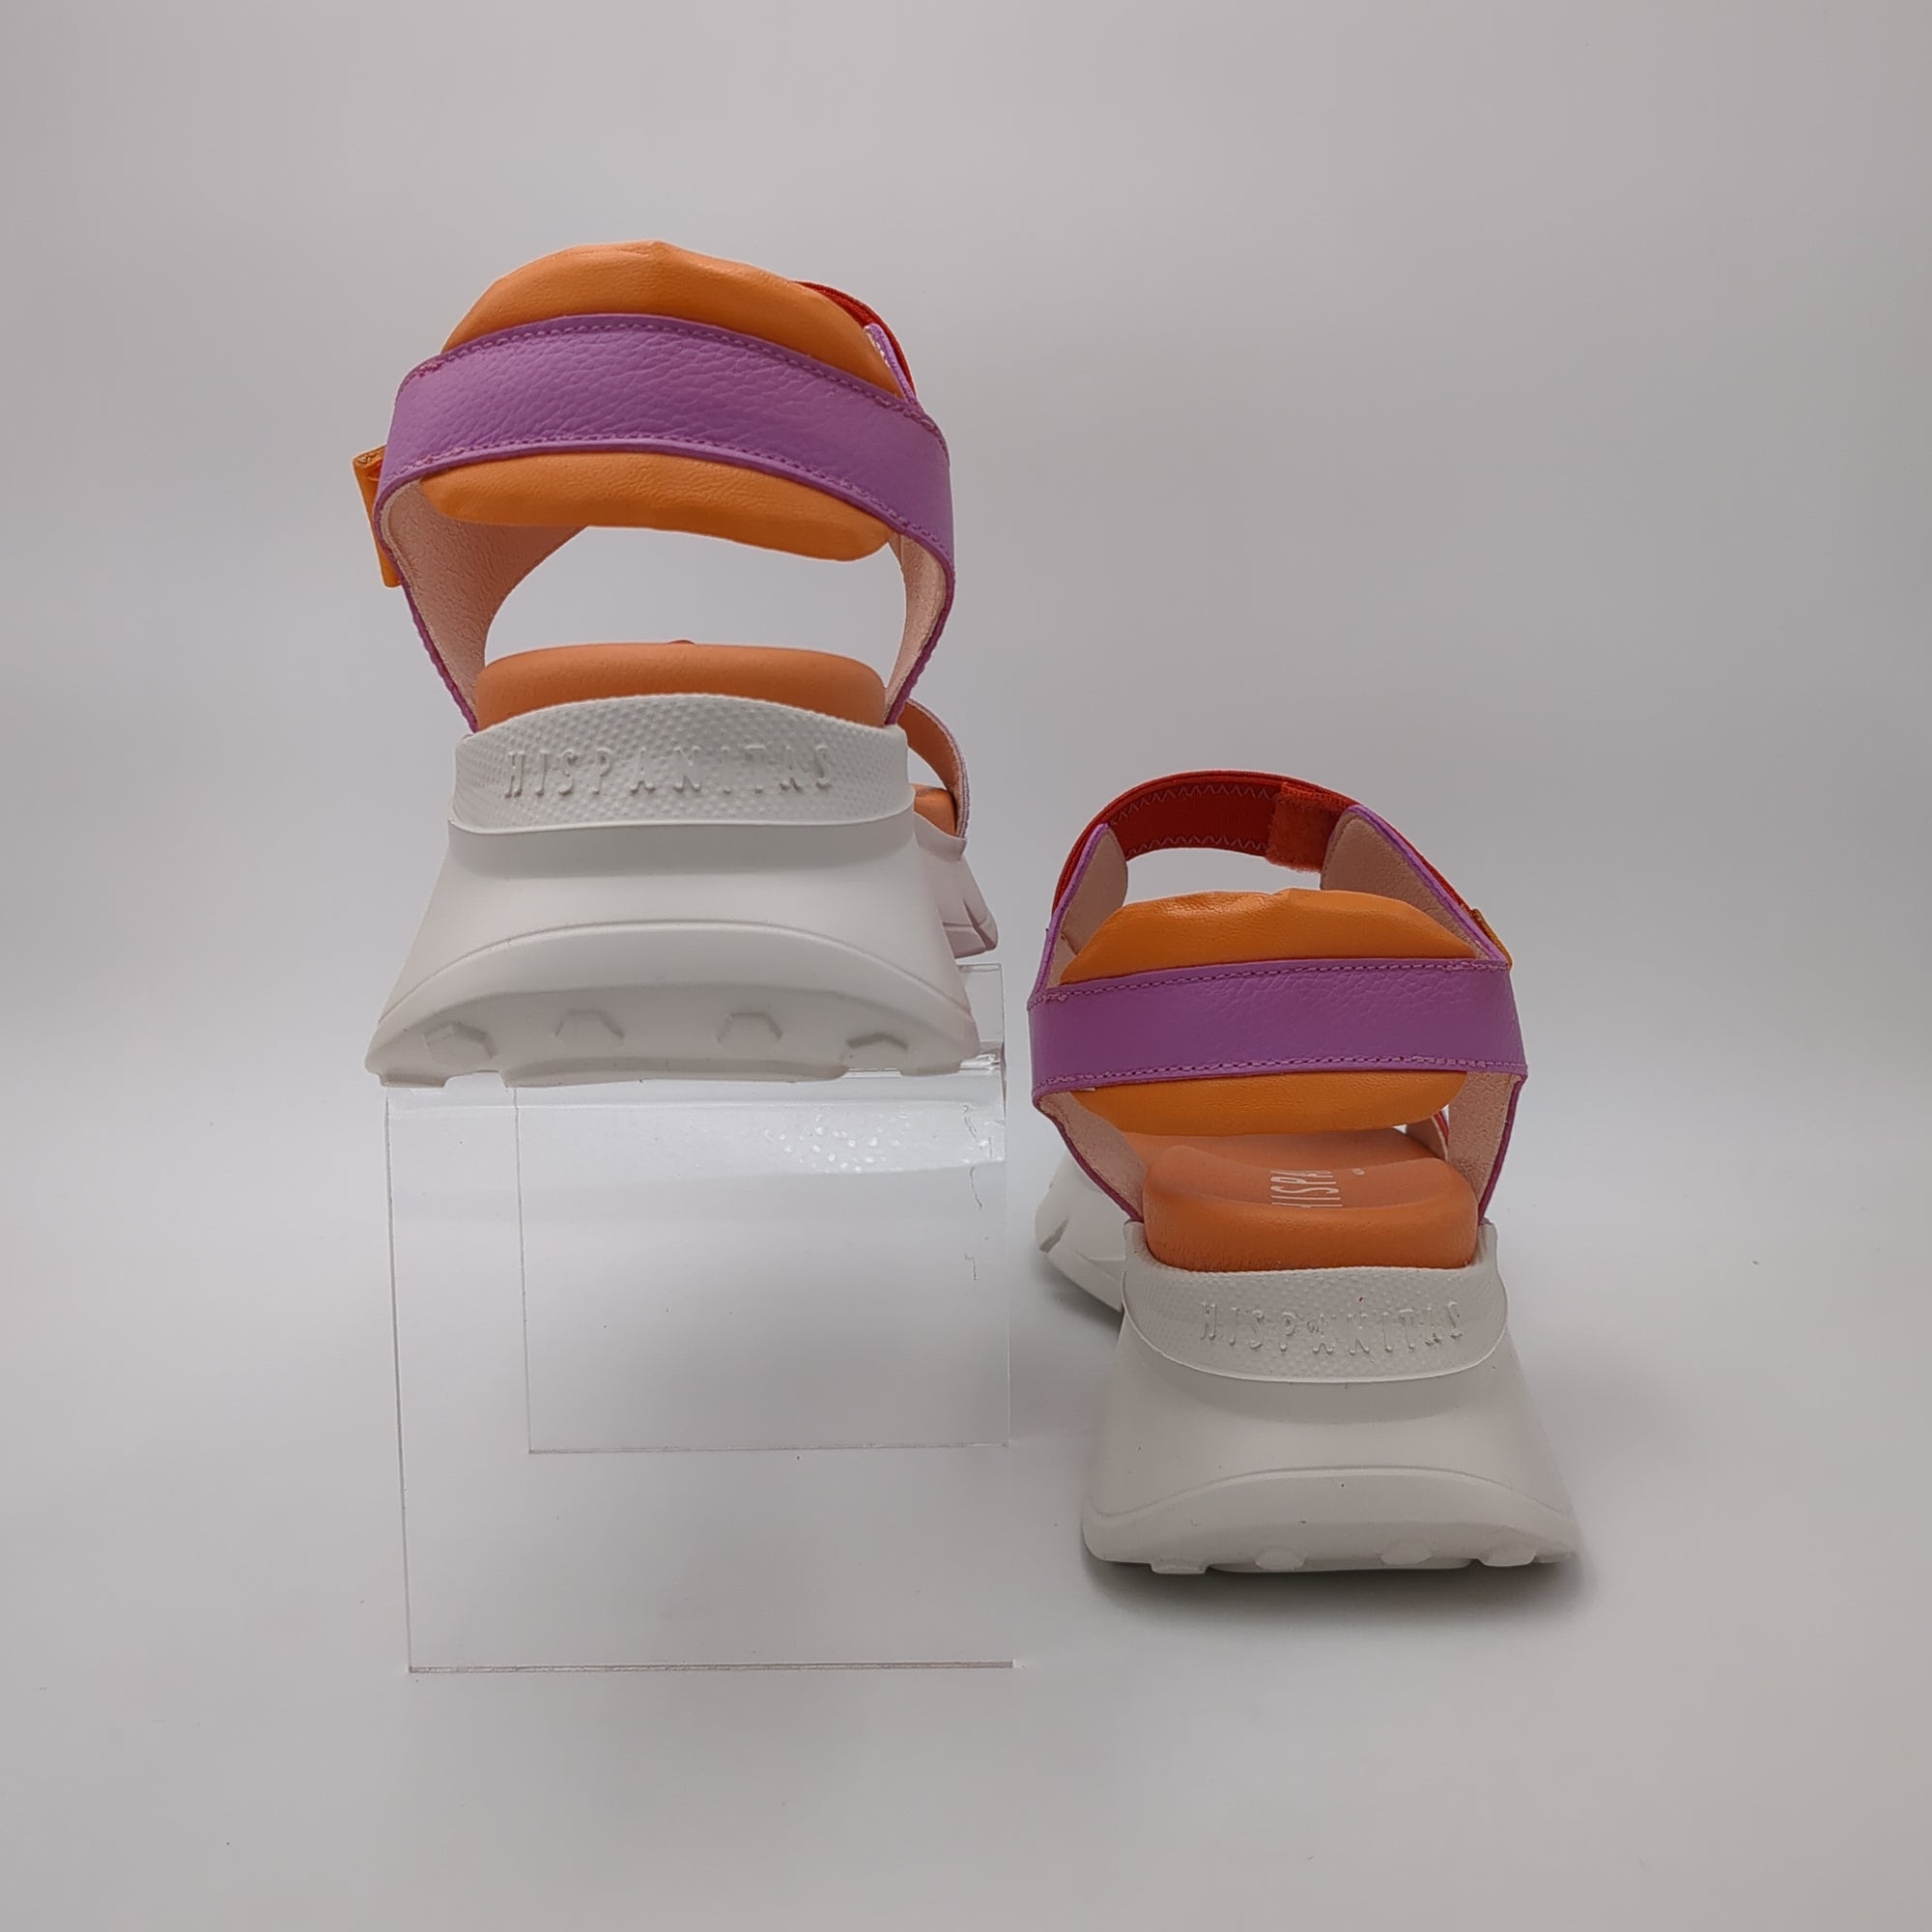 Hispanitas Colorful Wedge Sandals - Vibrant & Adjustable